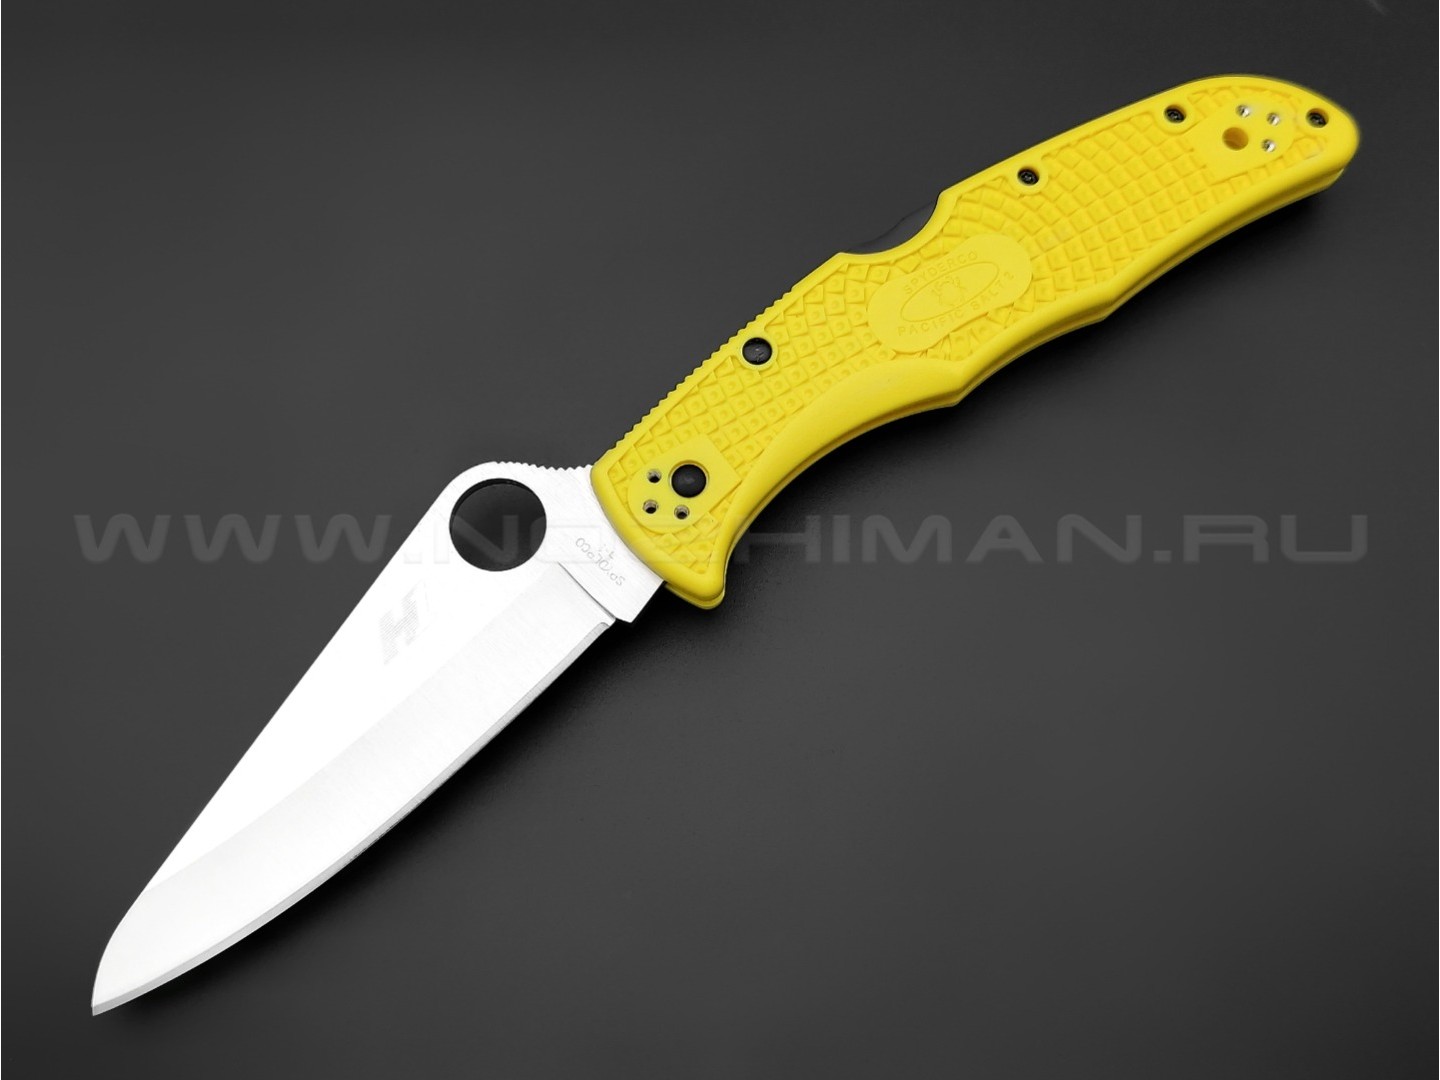 Нож Spyderco Pacific Salt 2 C91PYL2 сталь H-1, рукоять FRN Yellow